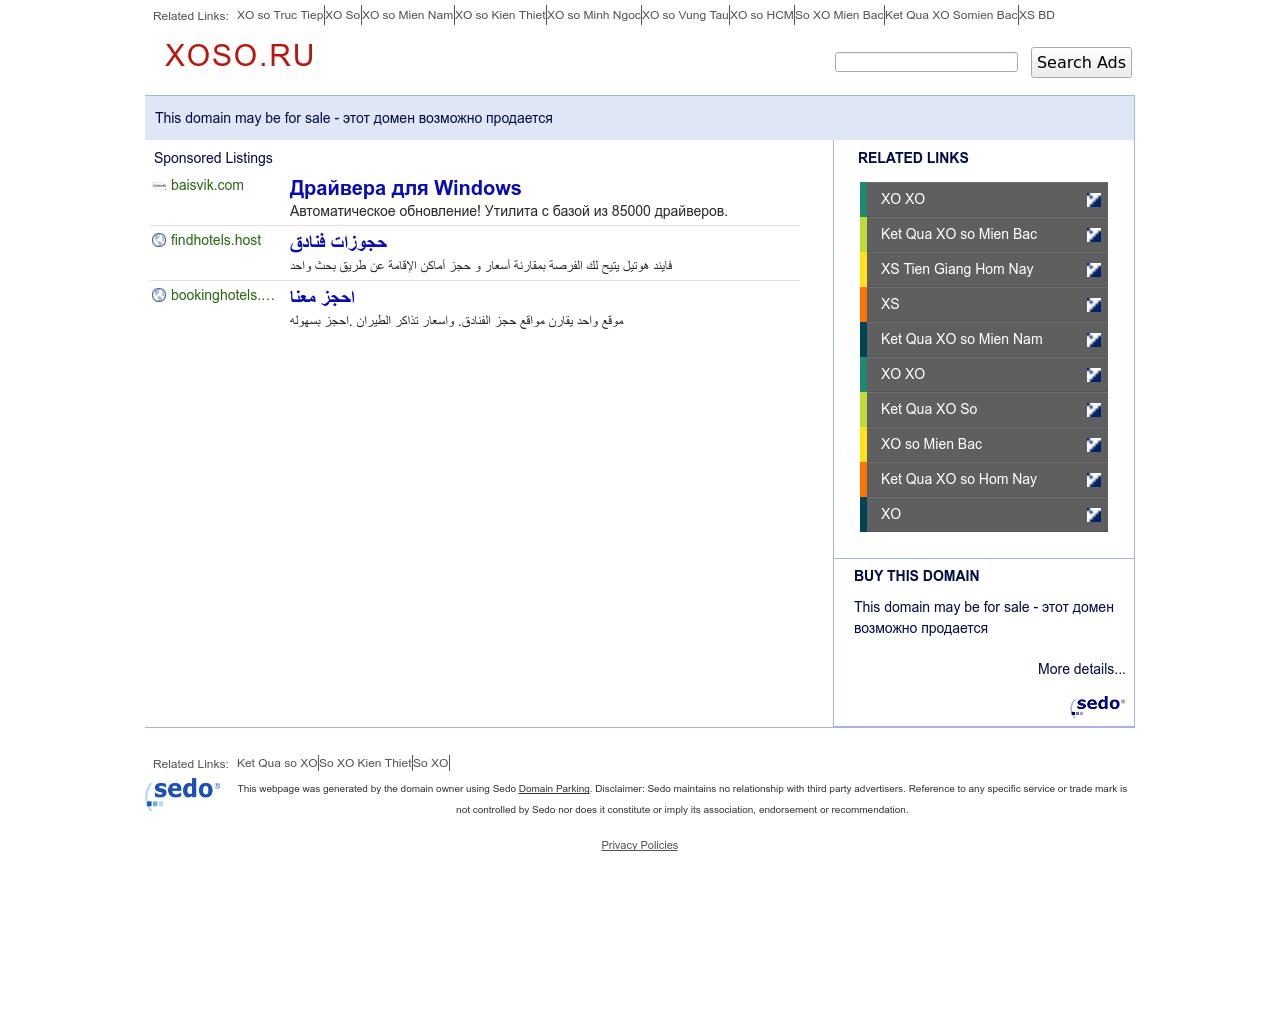 Изображение сайта xoso.ru в разрешении 1280x1024